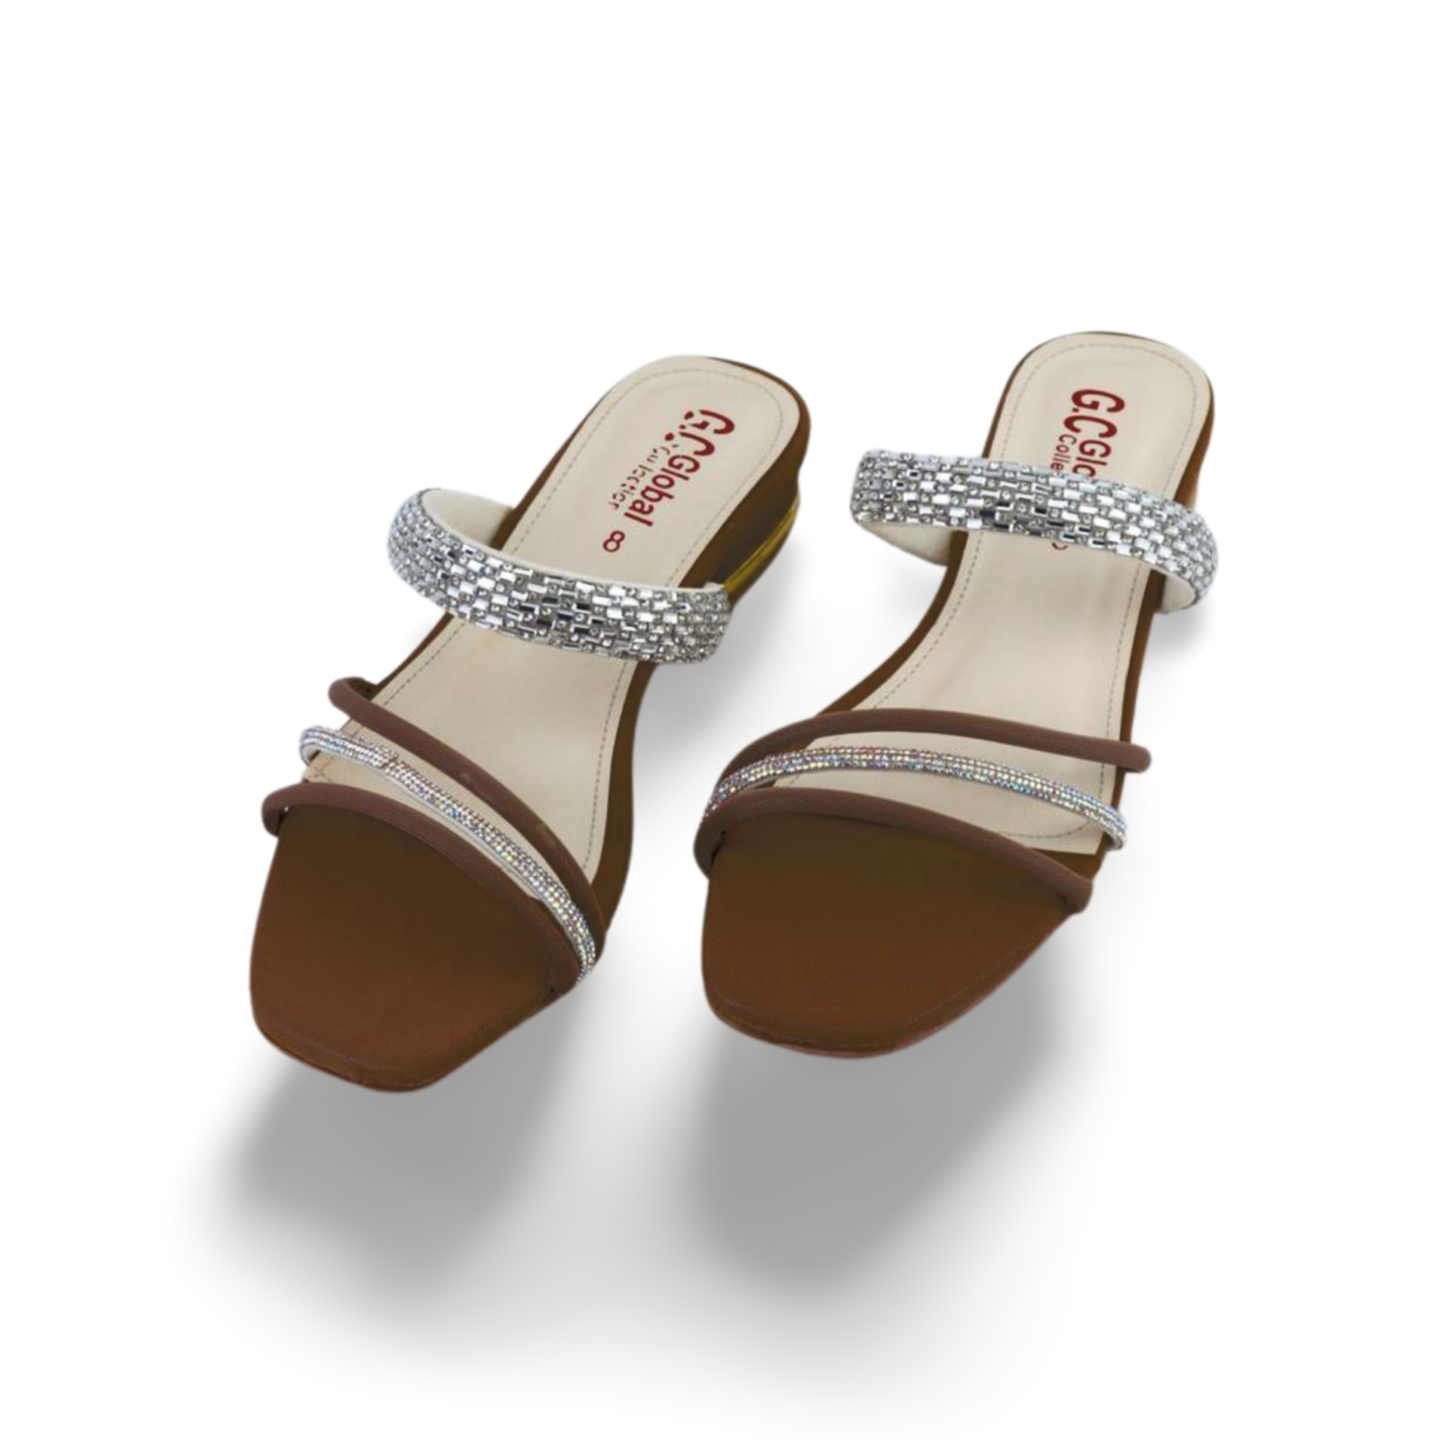 Stylish and Comfortable Rhinestone Sandals for Women